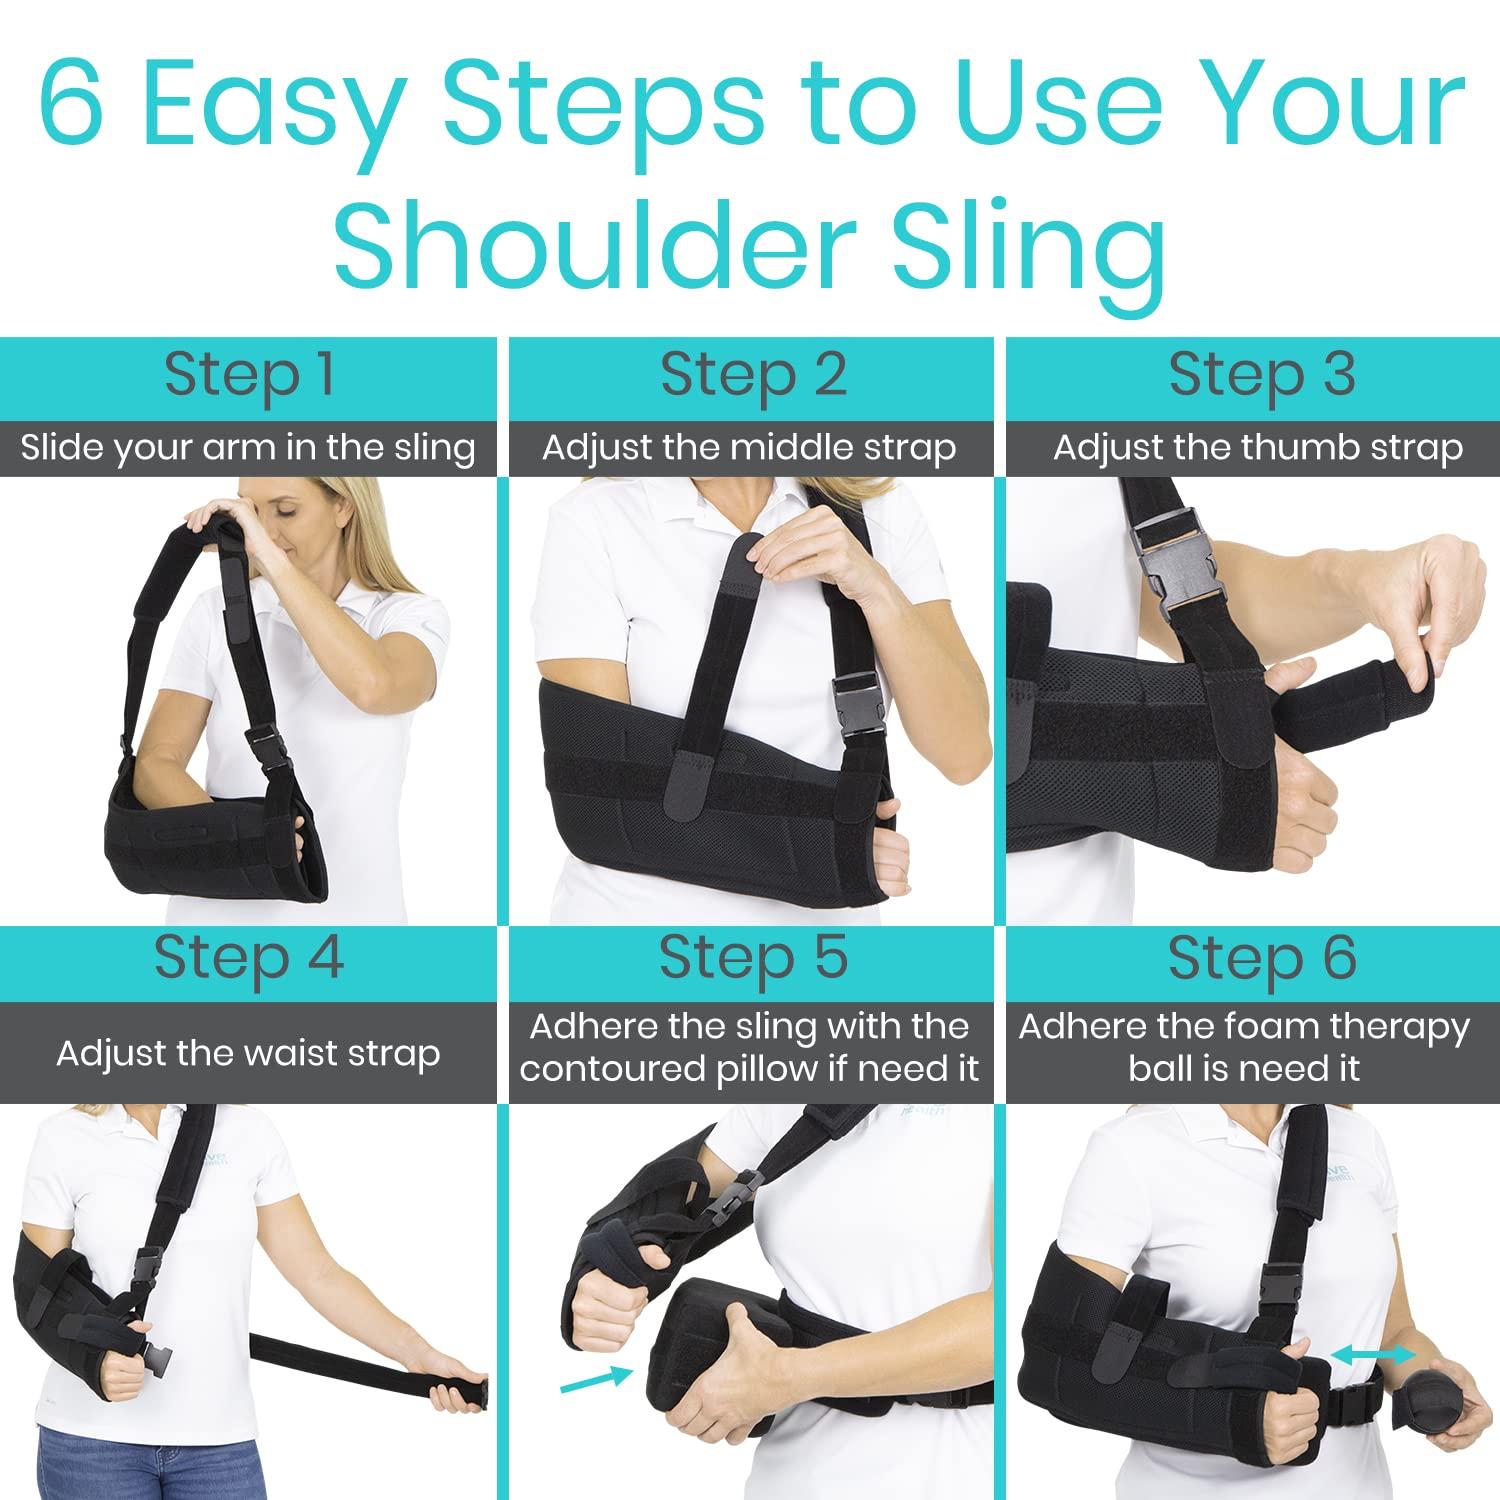 Vive Shoulder Abduction Sling - Immobilizer for Injury Support